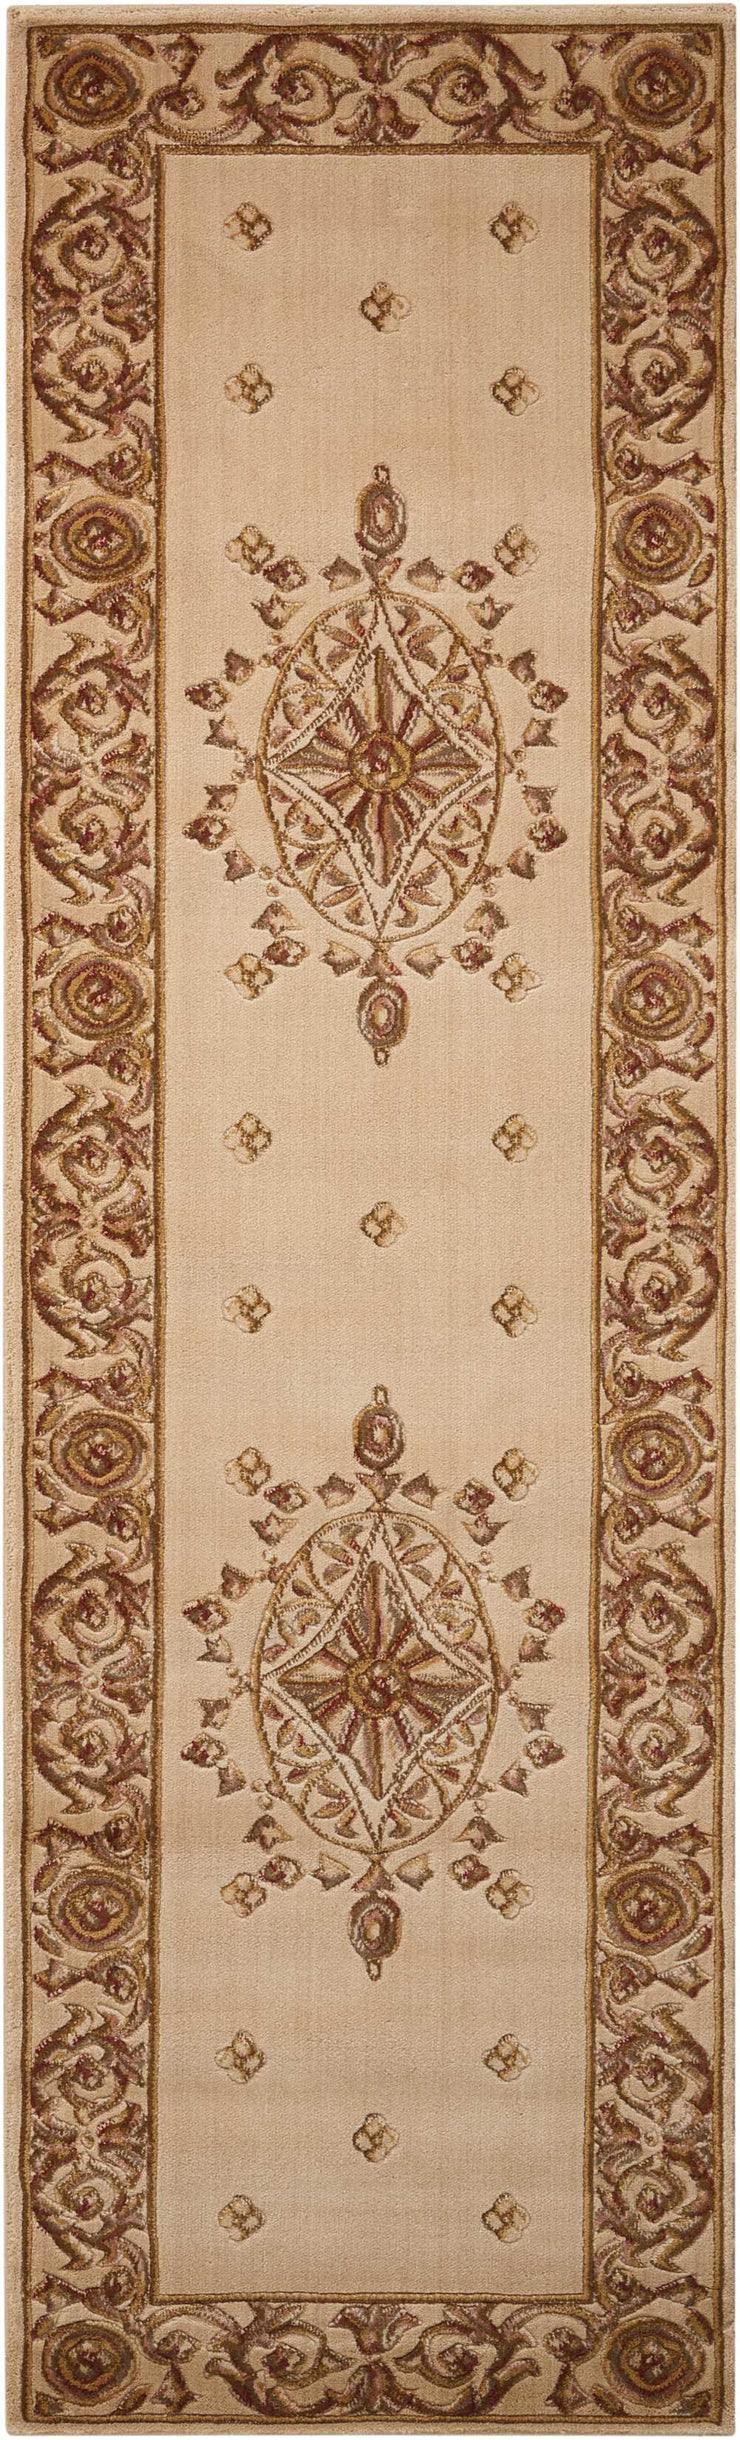 ashton house beige rug by nourison nsn 099446318855 1